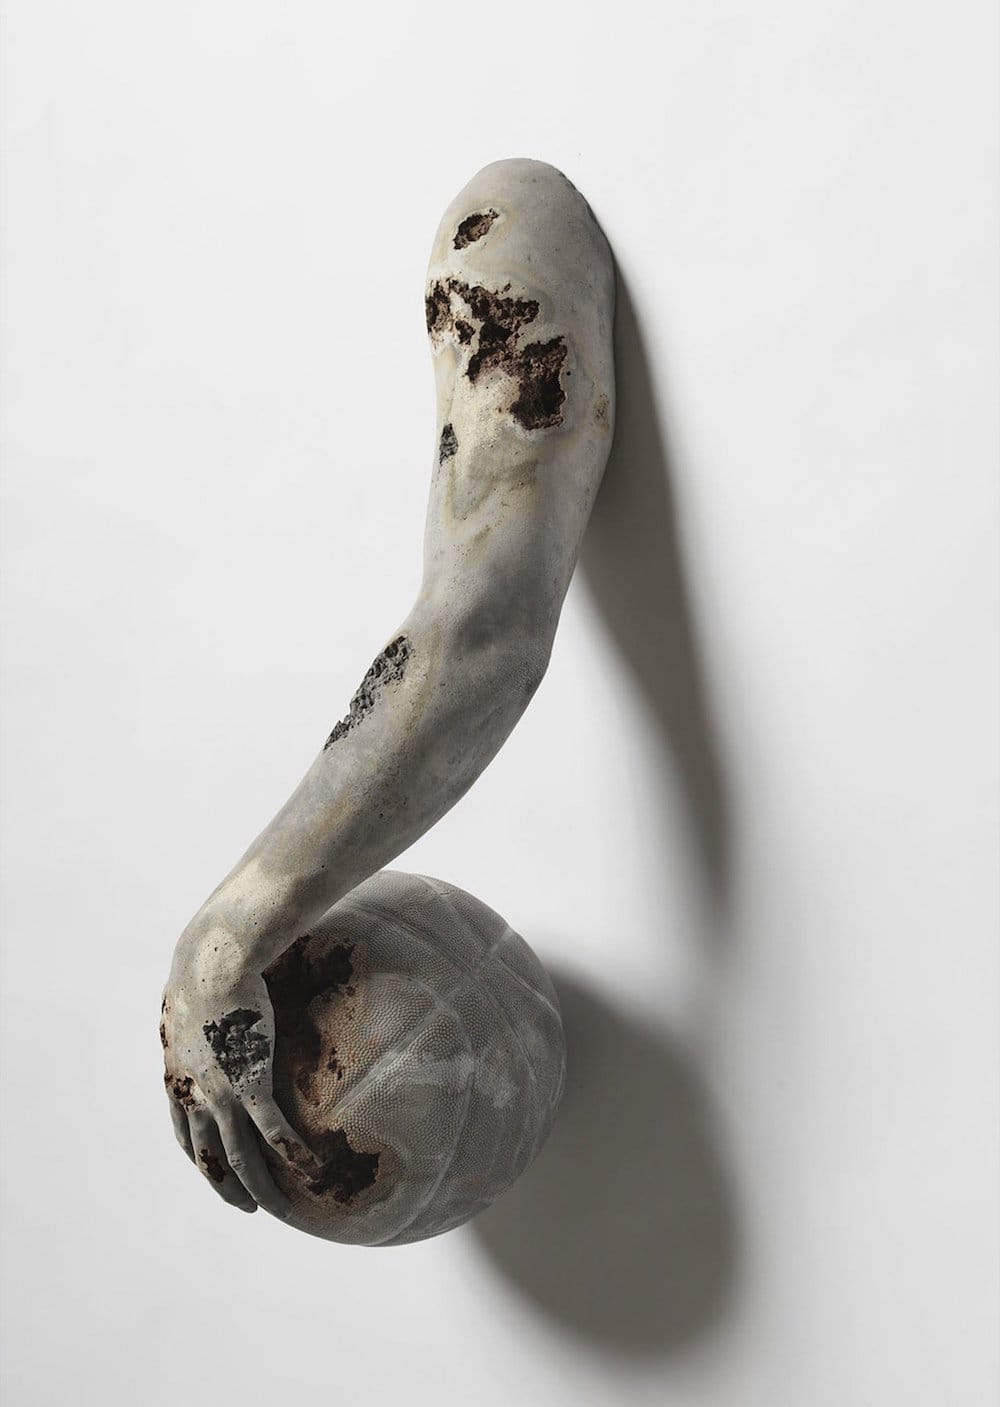 Life Size Human Figure Hydrostone Sculptures By Daniel Arsham (4)